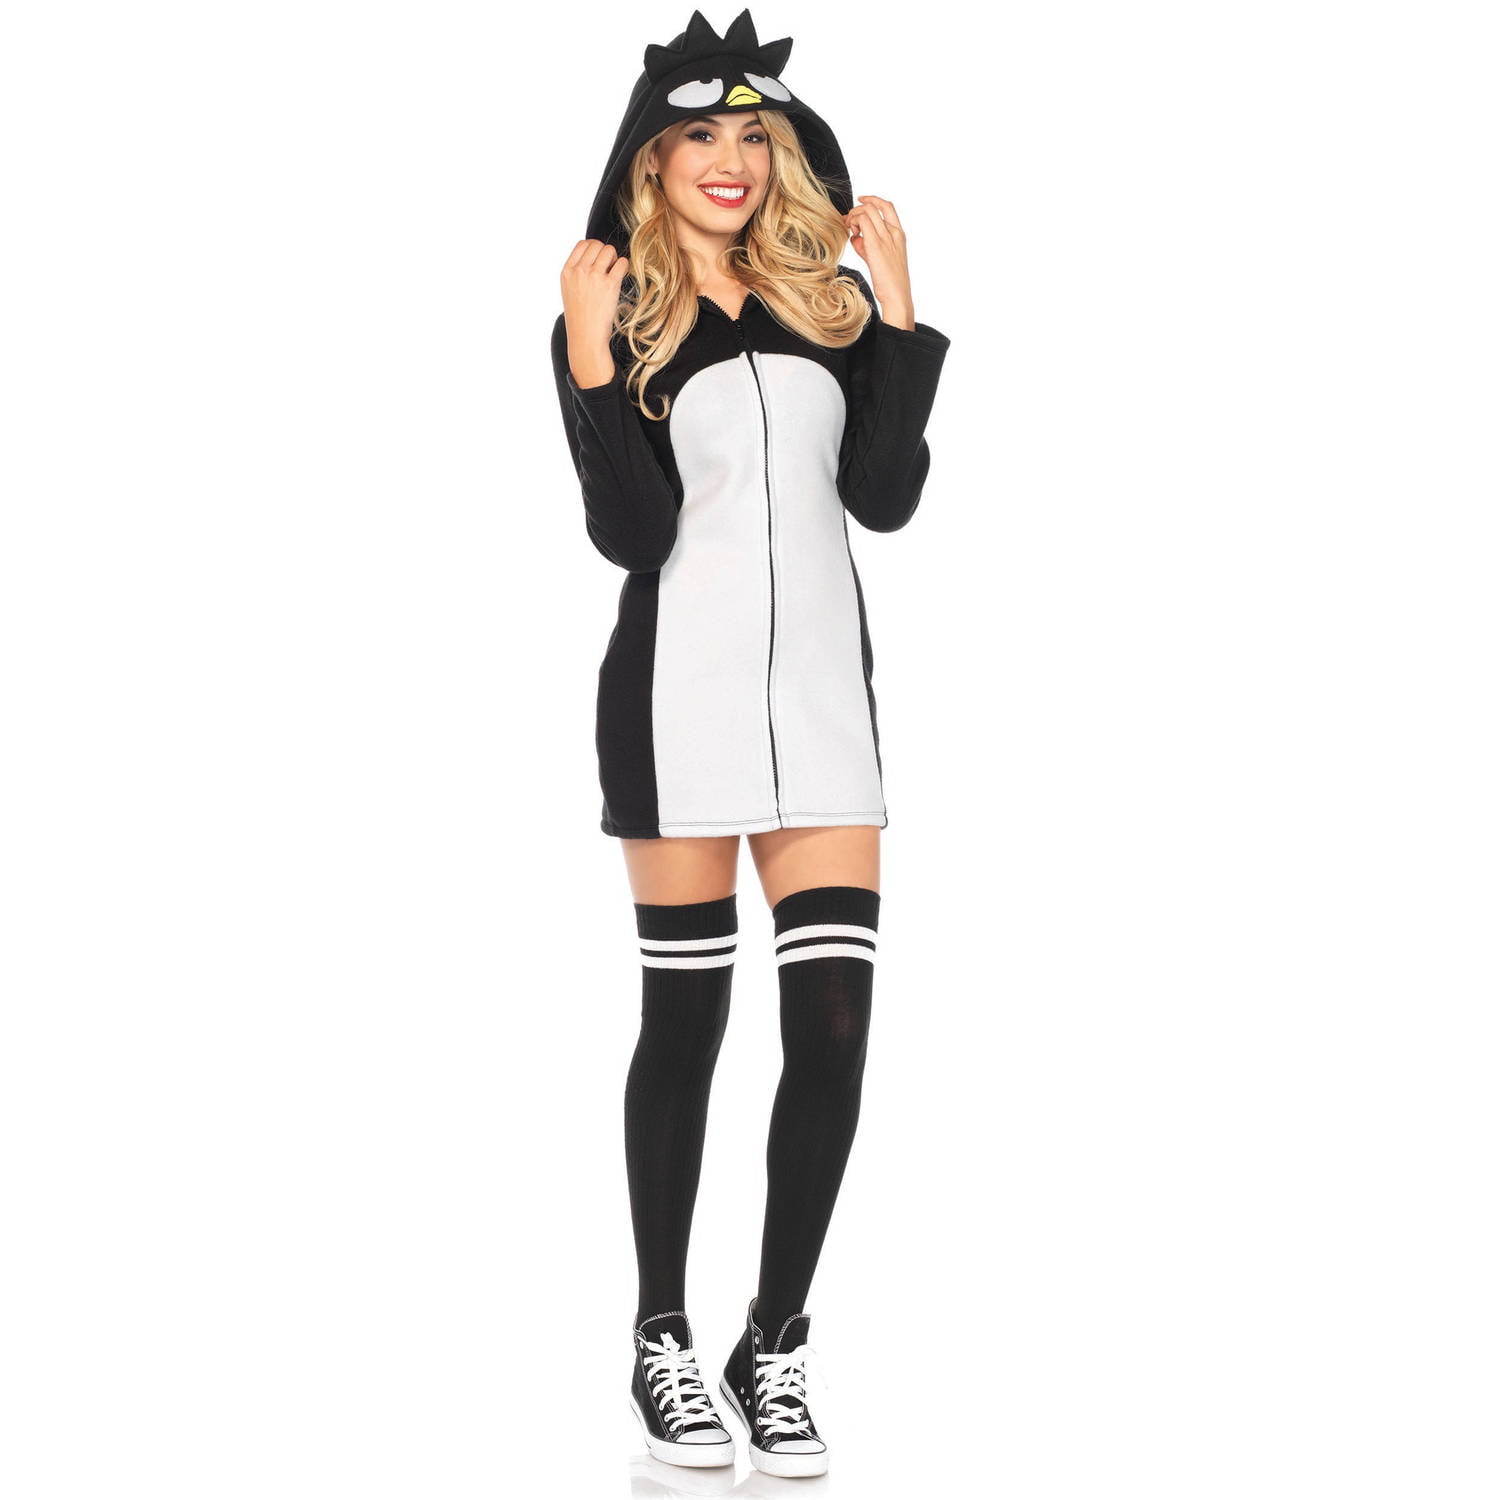 Darling Hello Kitty Anime Dress Teen Adult Costume Cosplay 4 sizes Leg Avenue 